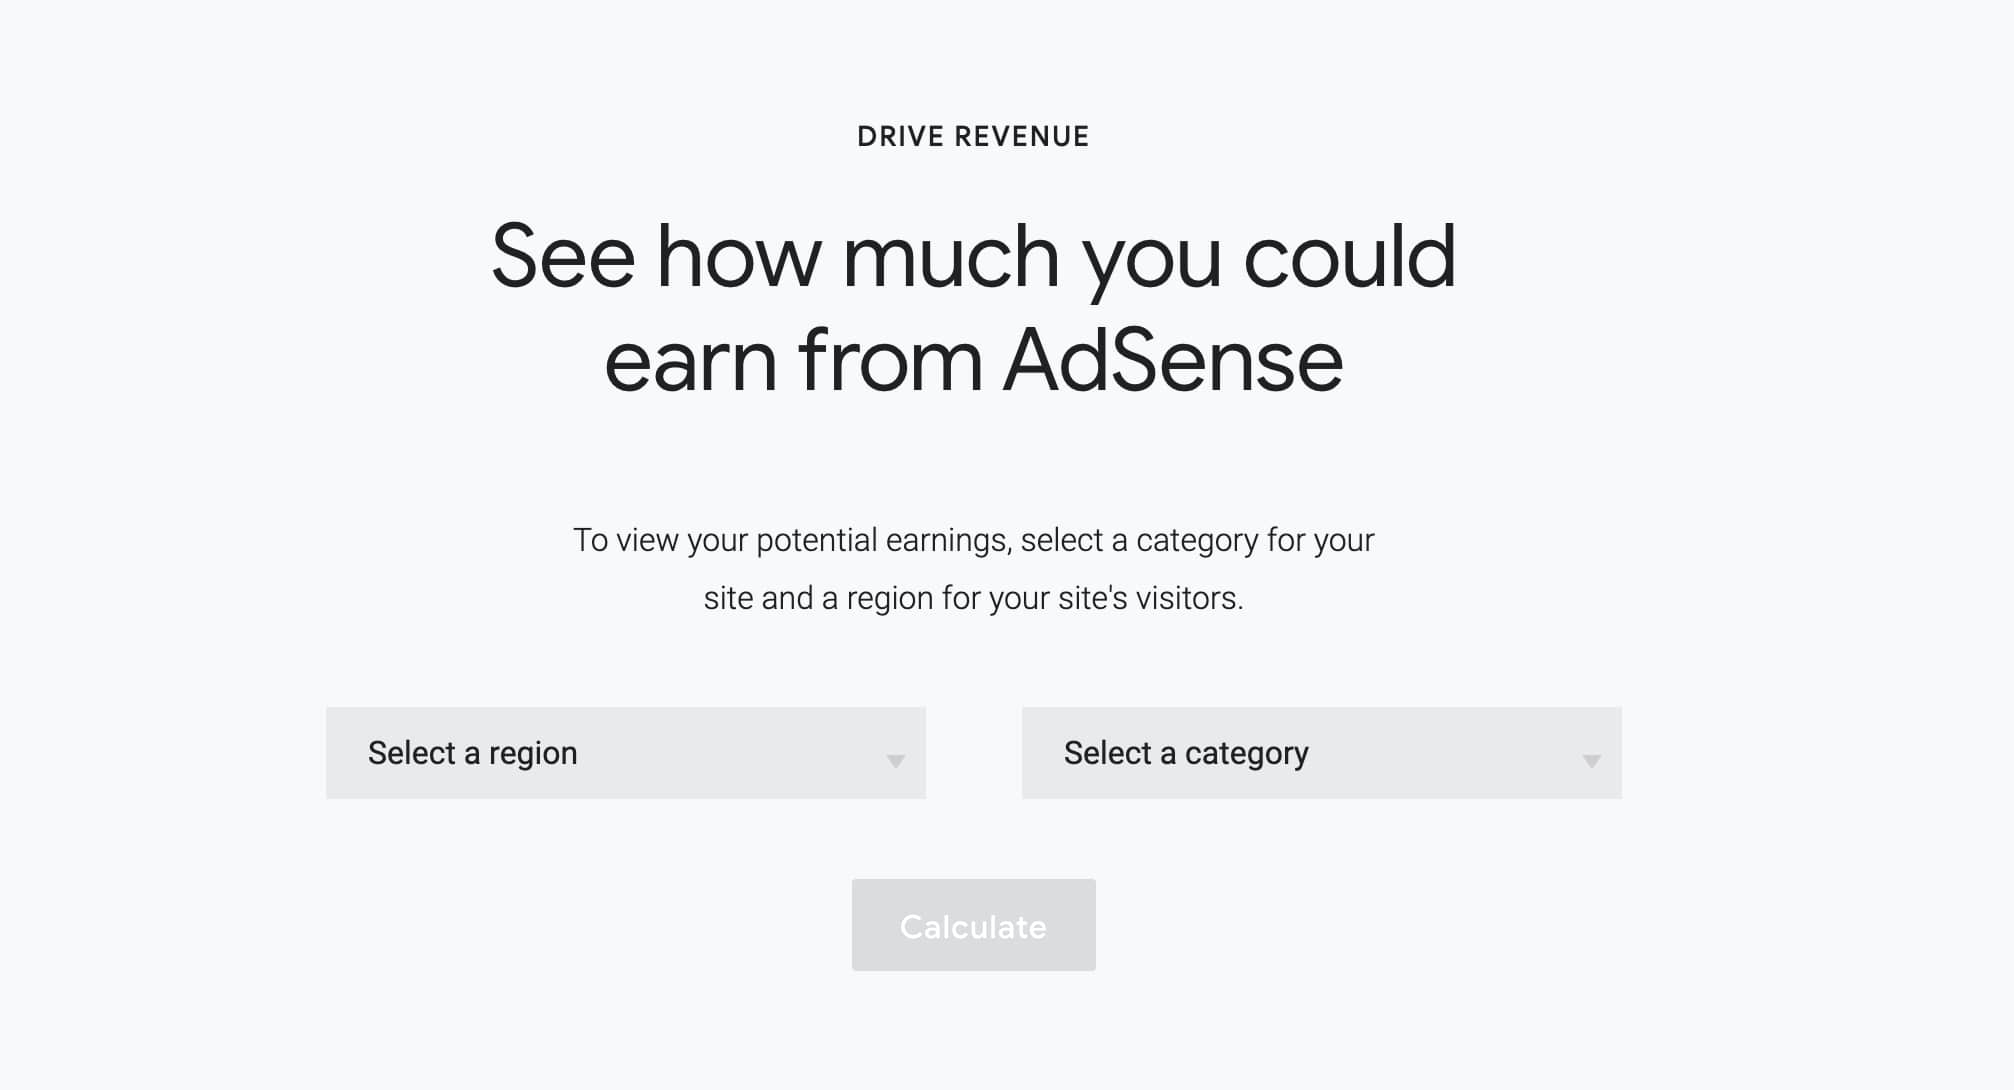 The Adsense revenue calculator quantifies your potential annual revenue